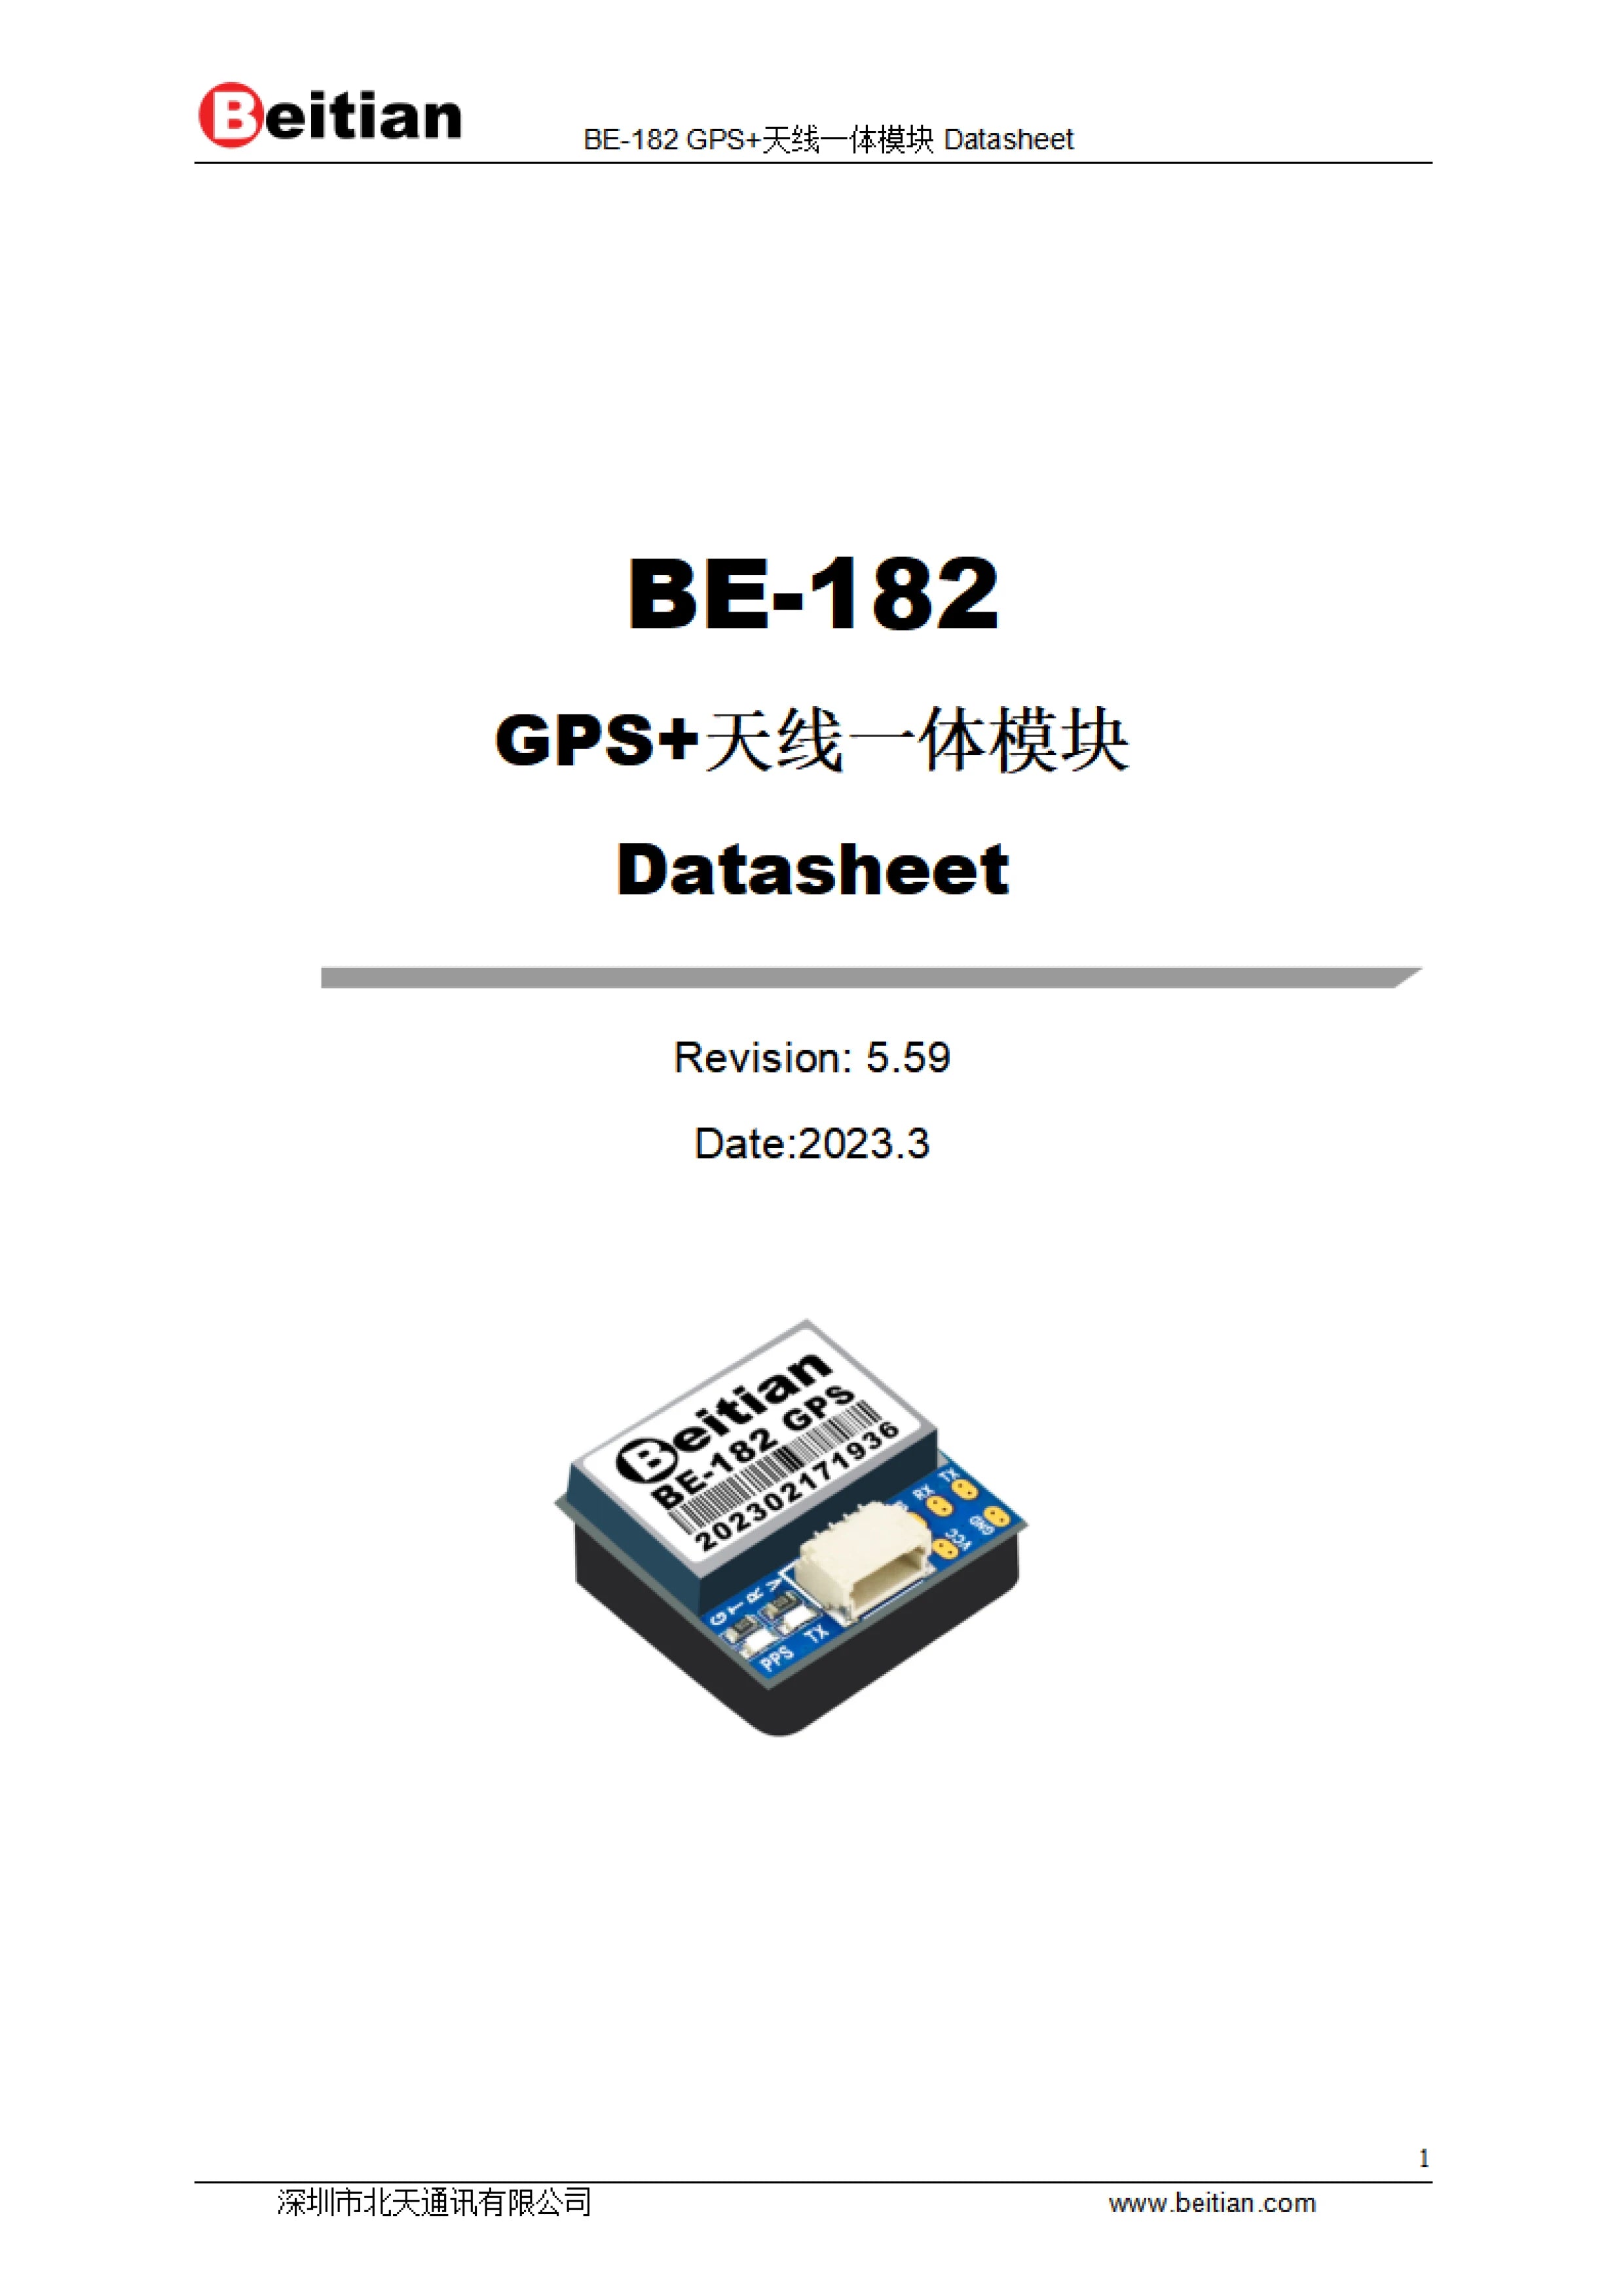 Beitian BE-122 BE-182 BE-252Q GPS, Beitian BE-182 GPS+7e#-#t## Datasheet Revision